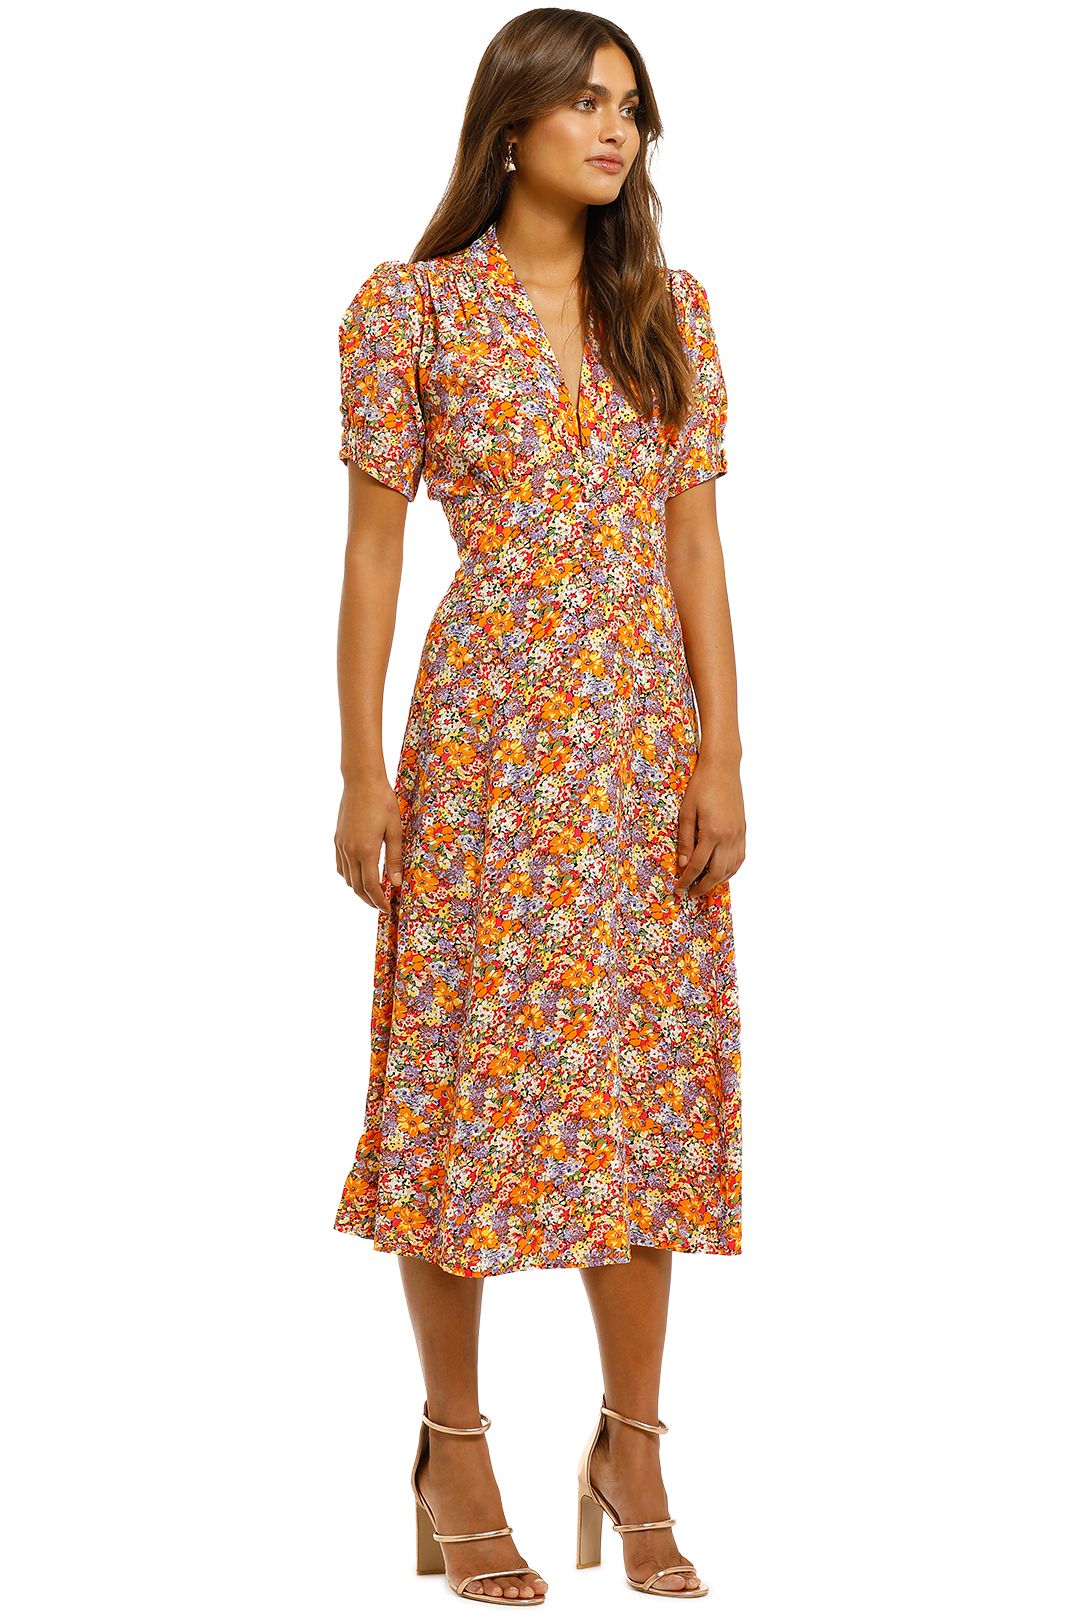 Meadows Midi Dress in Meja Floral Print by Faithfull for Rent | GlamCorner